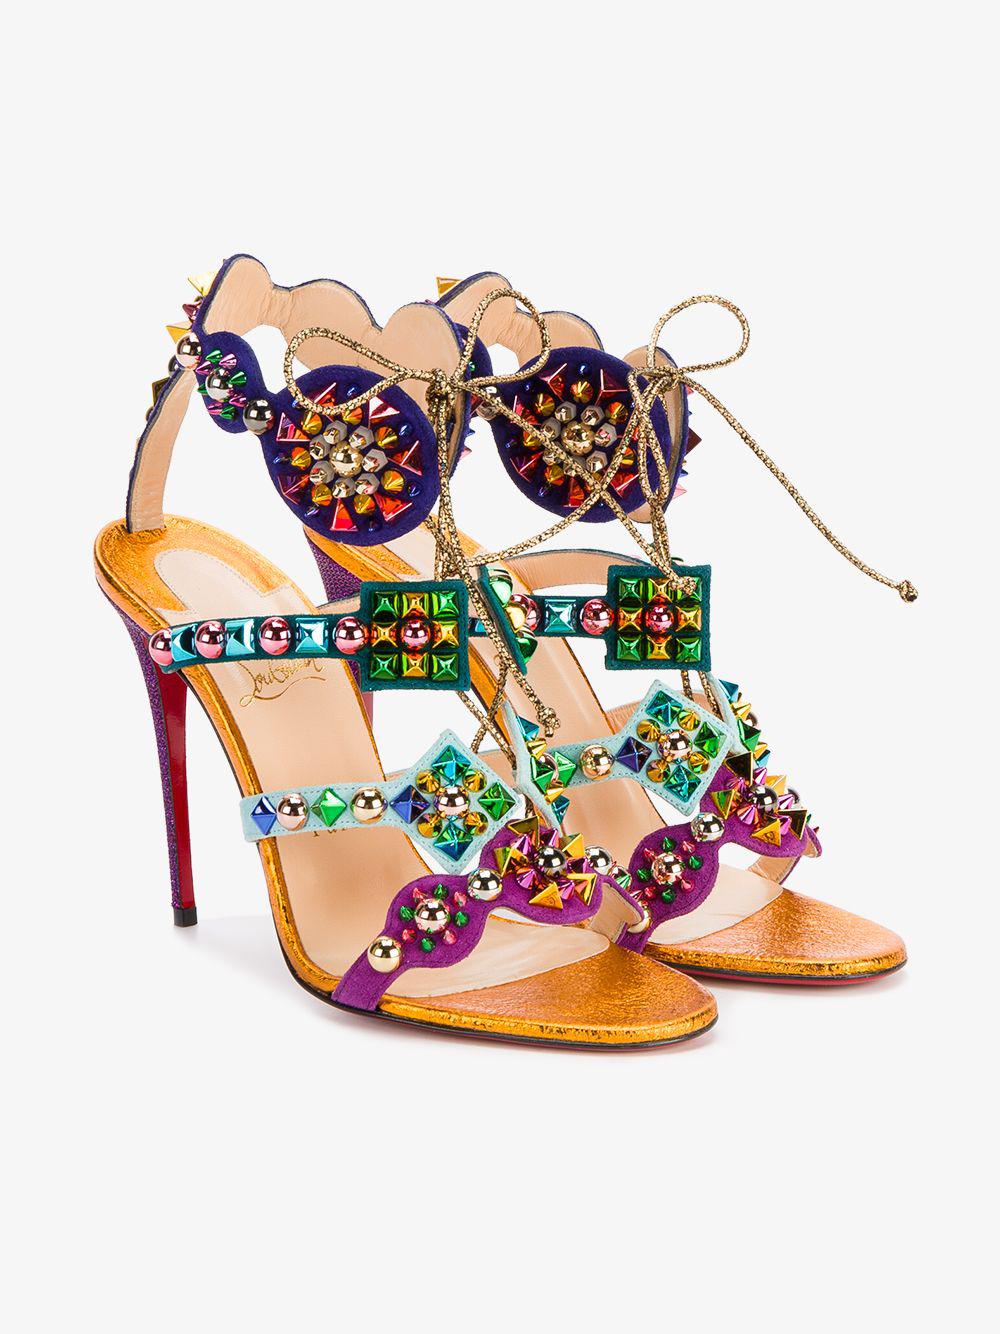 Christian Louboutin Crystal Embellished Stiletto Heeled Sandals